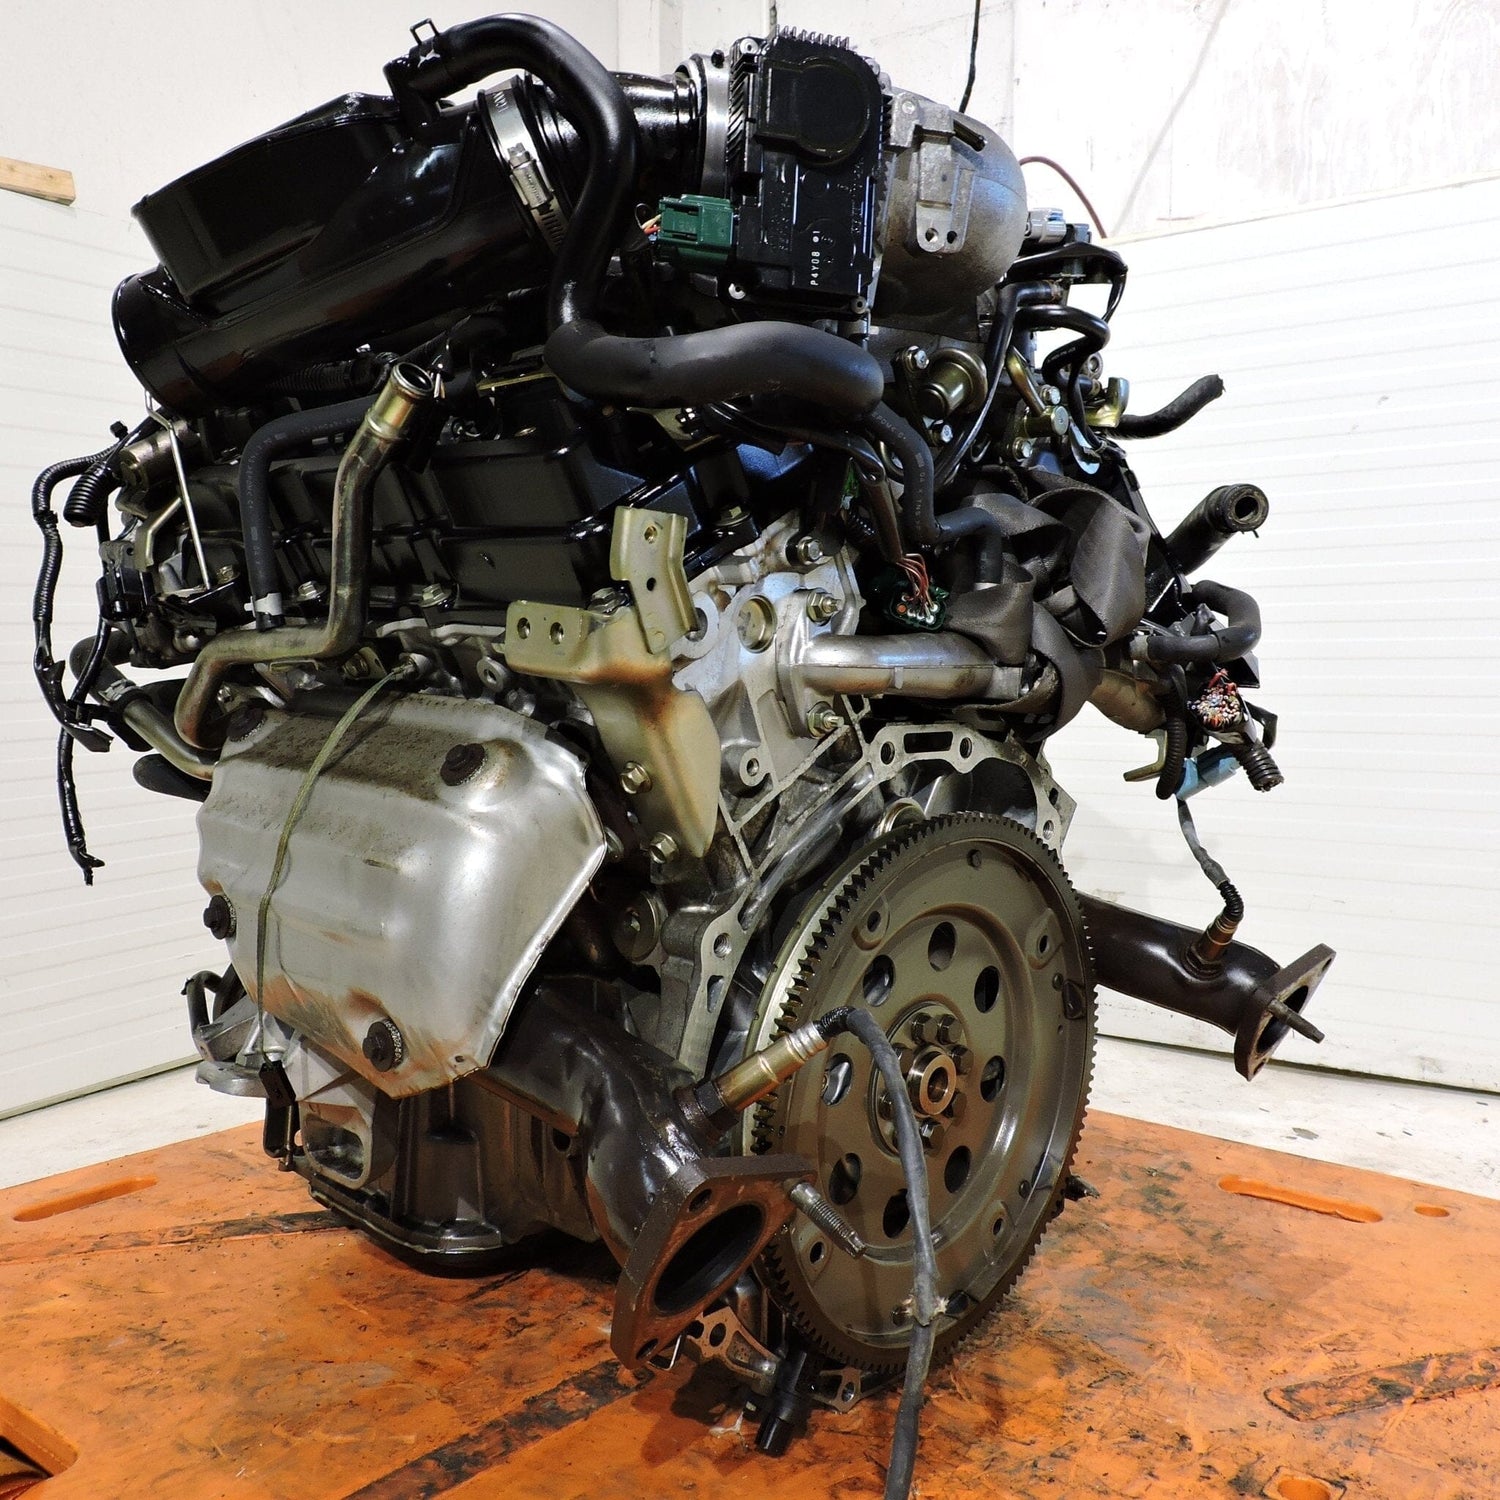 Infiniti G35 (2003-2004) 3.5L V6 JDM Engine - VQ35DE